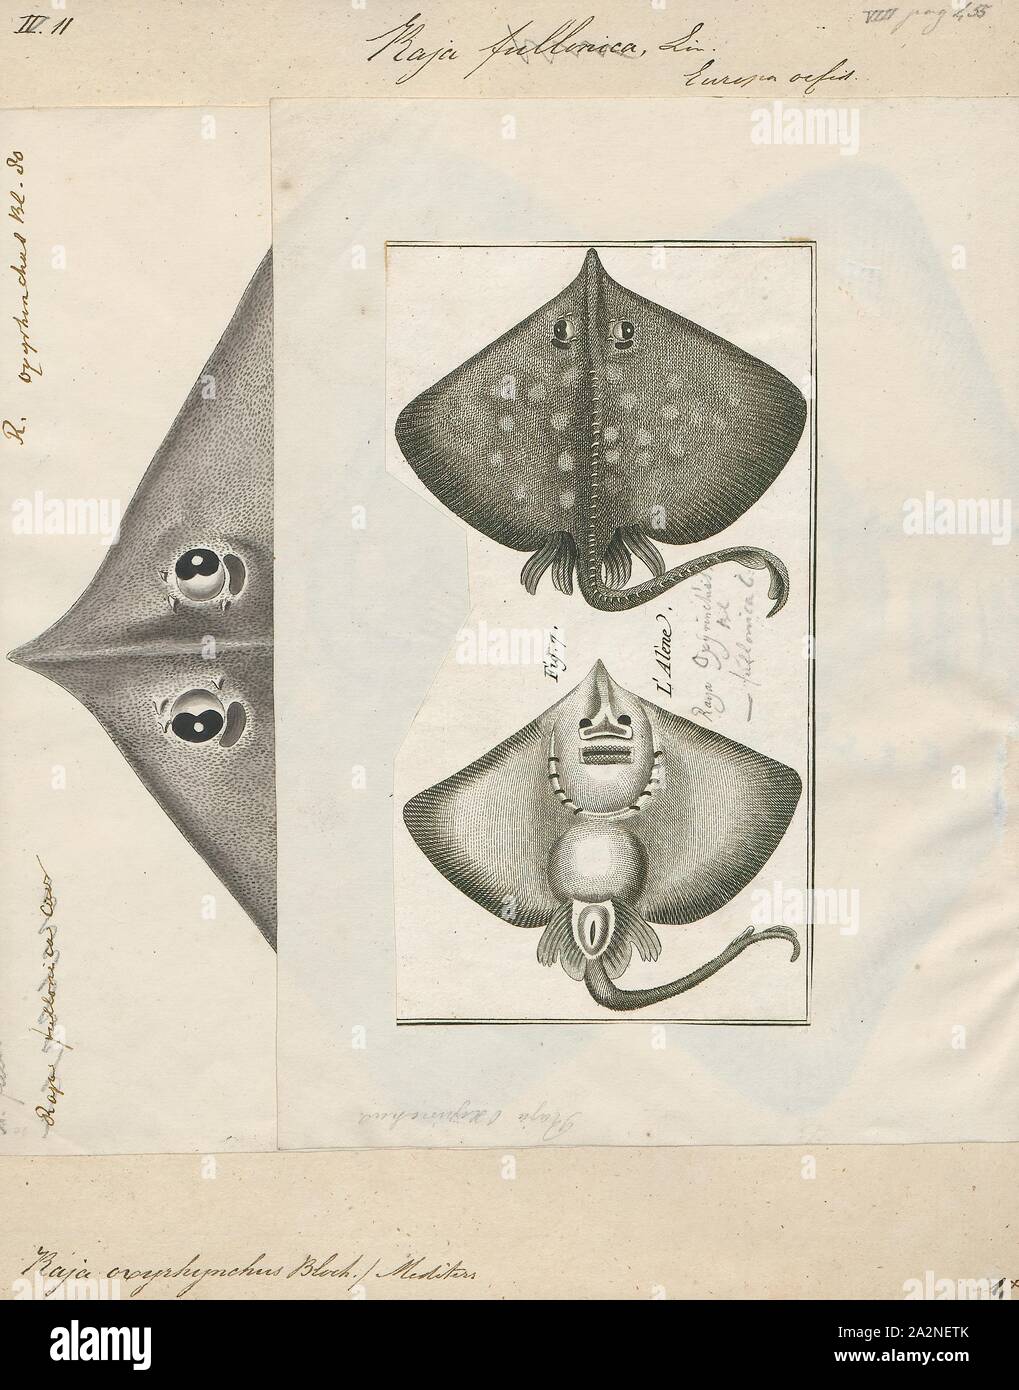 Raja oxyrhynchus, Print, 1700-1880 Stock Photo